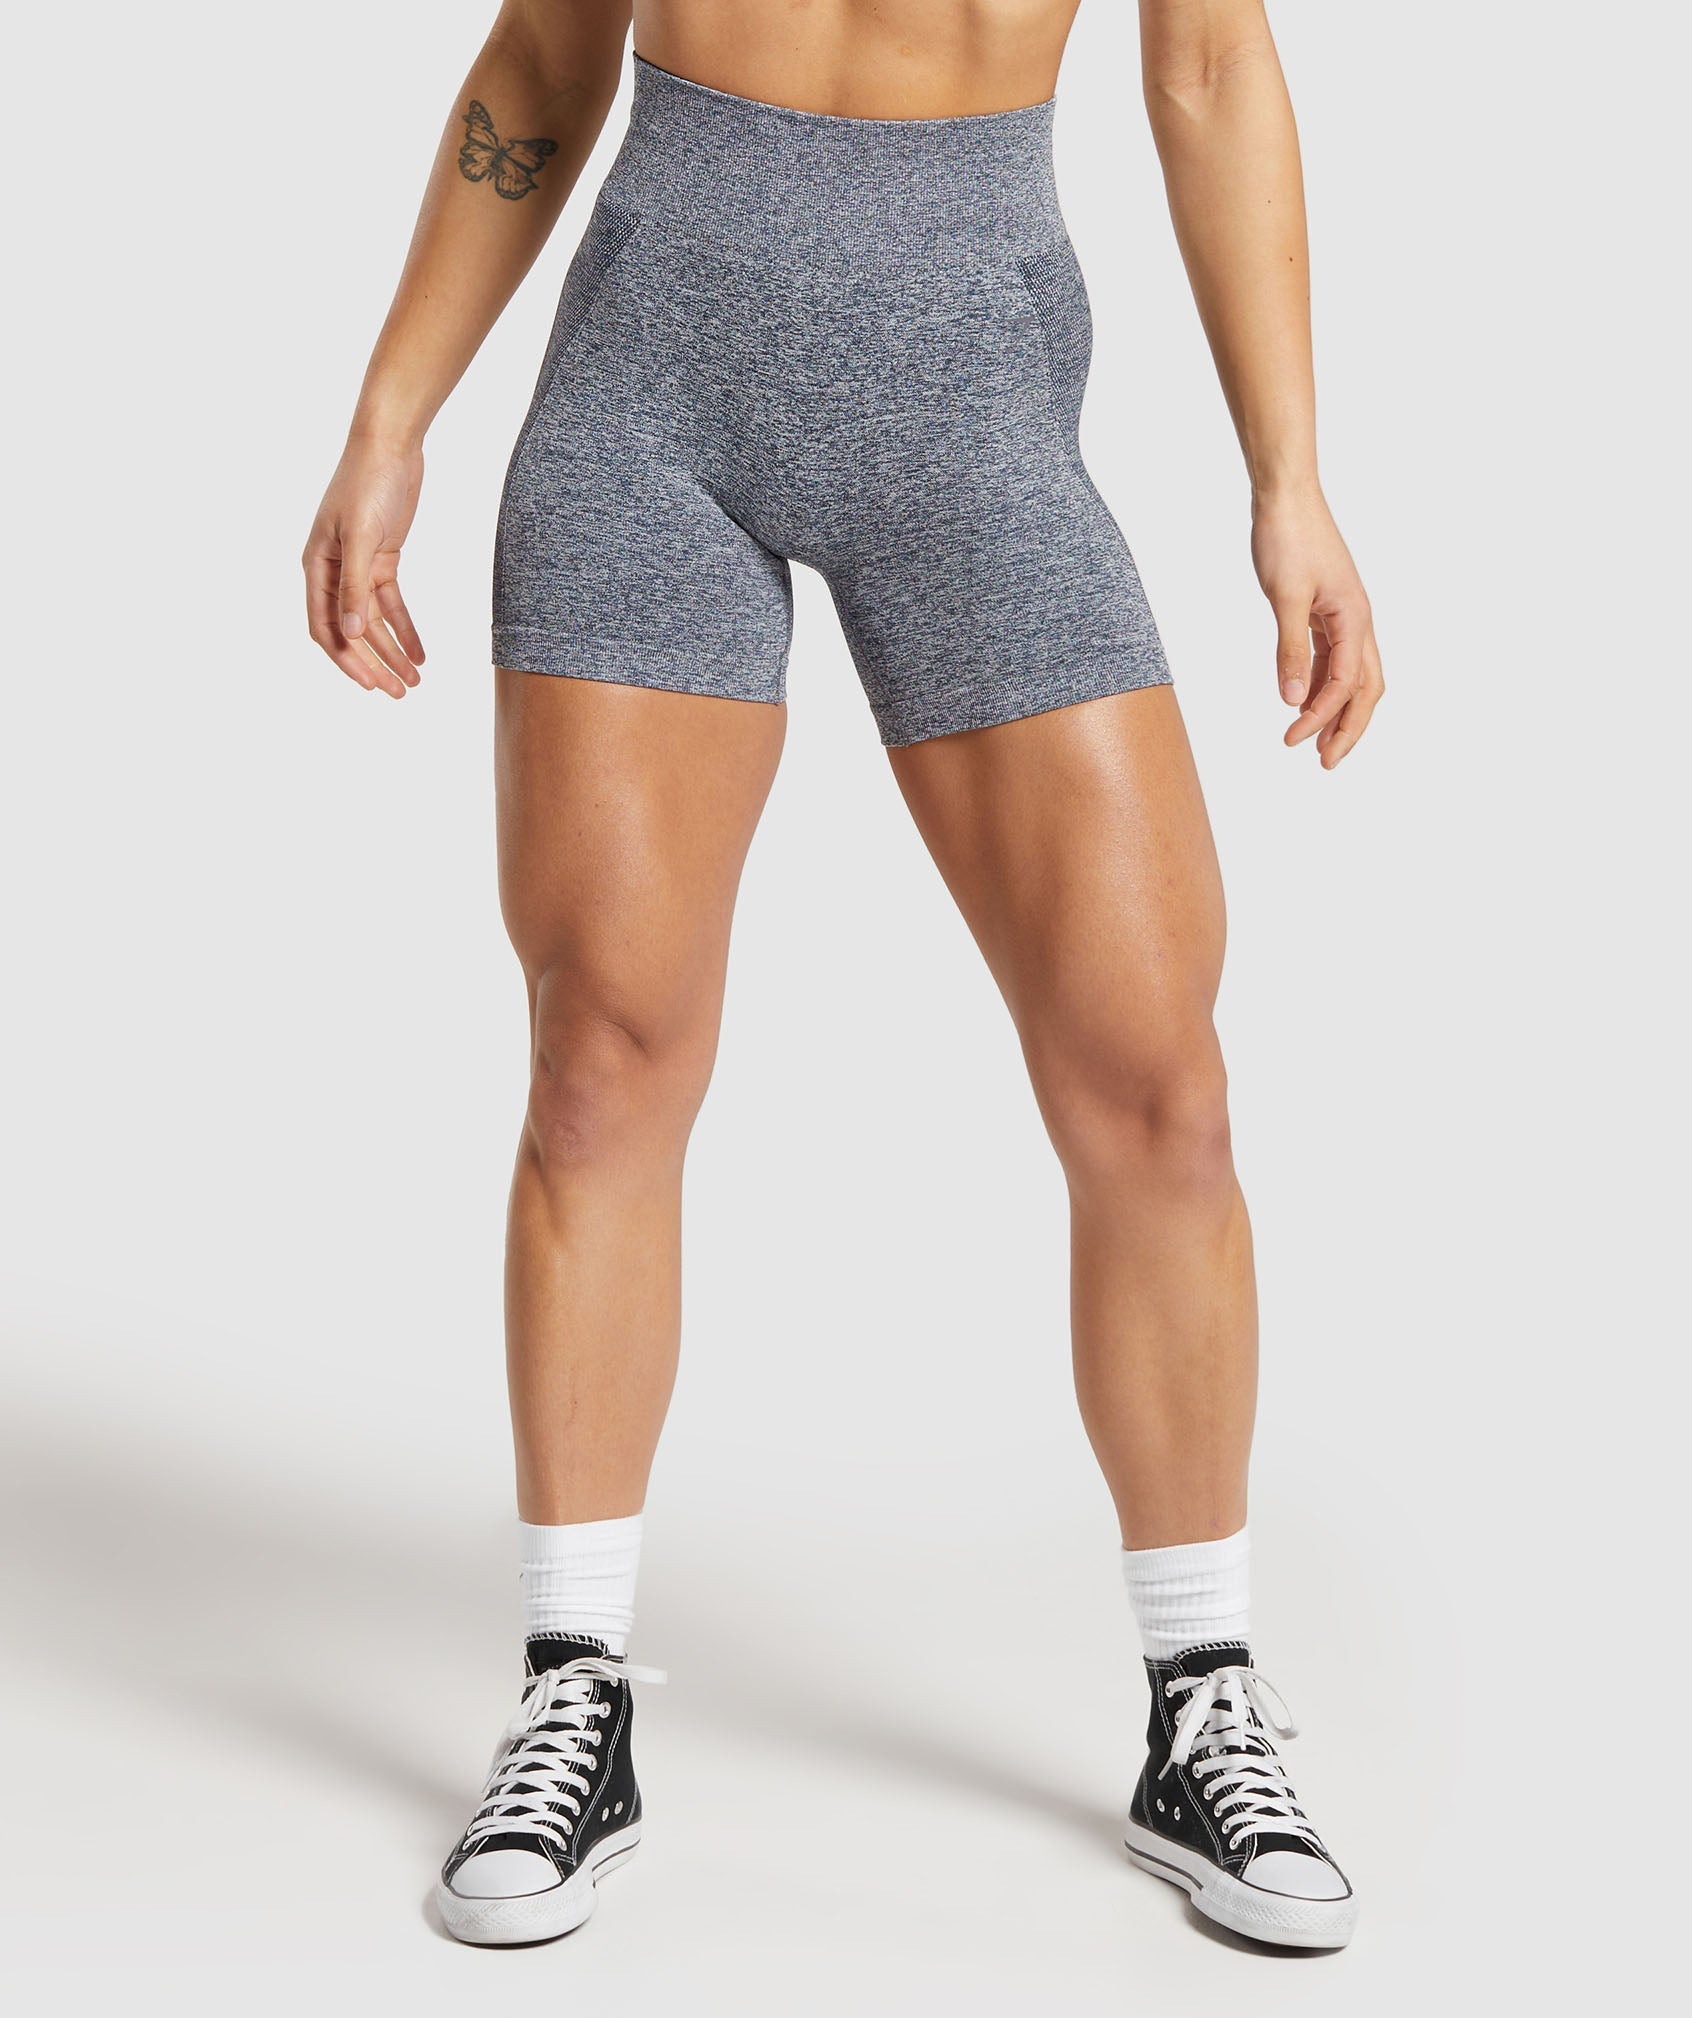 Flex Shorts in Titanium Blue/Pitch Grey